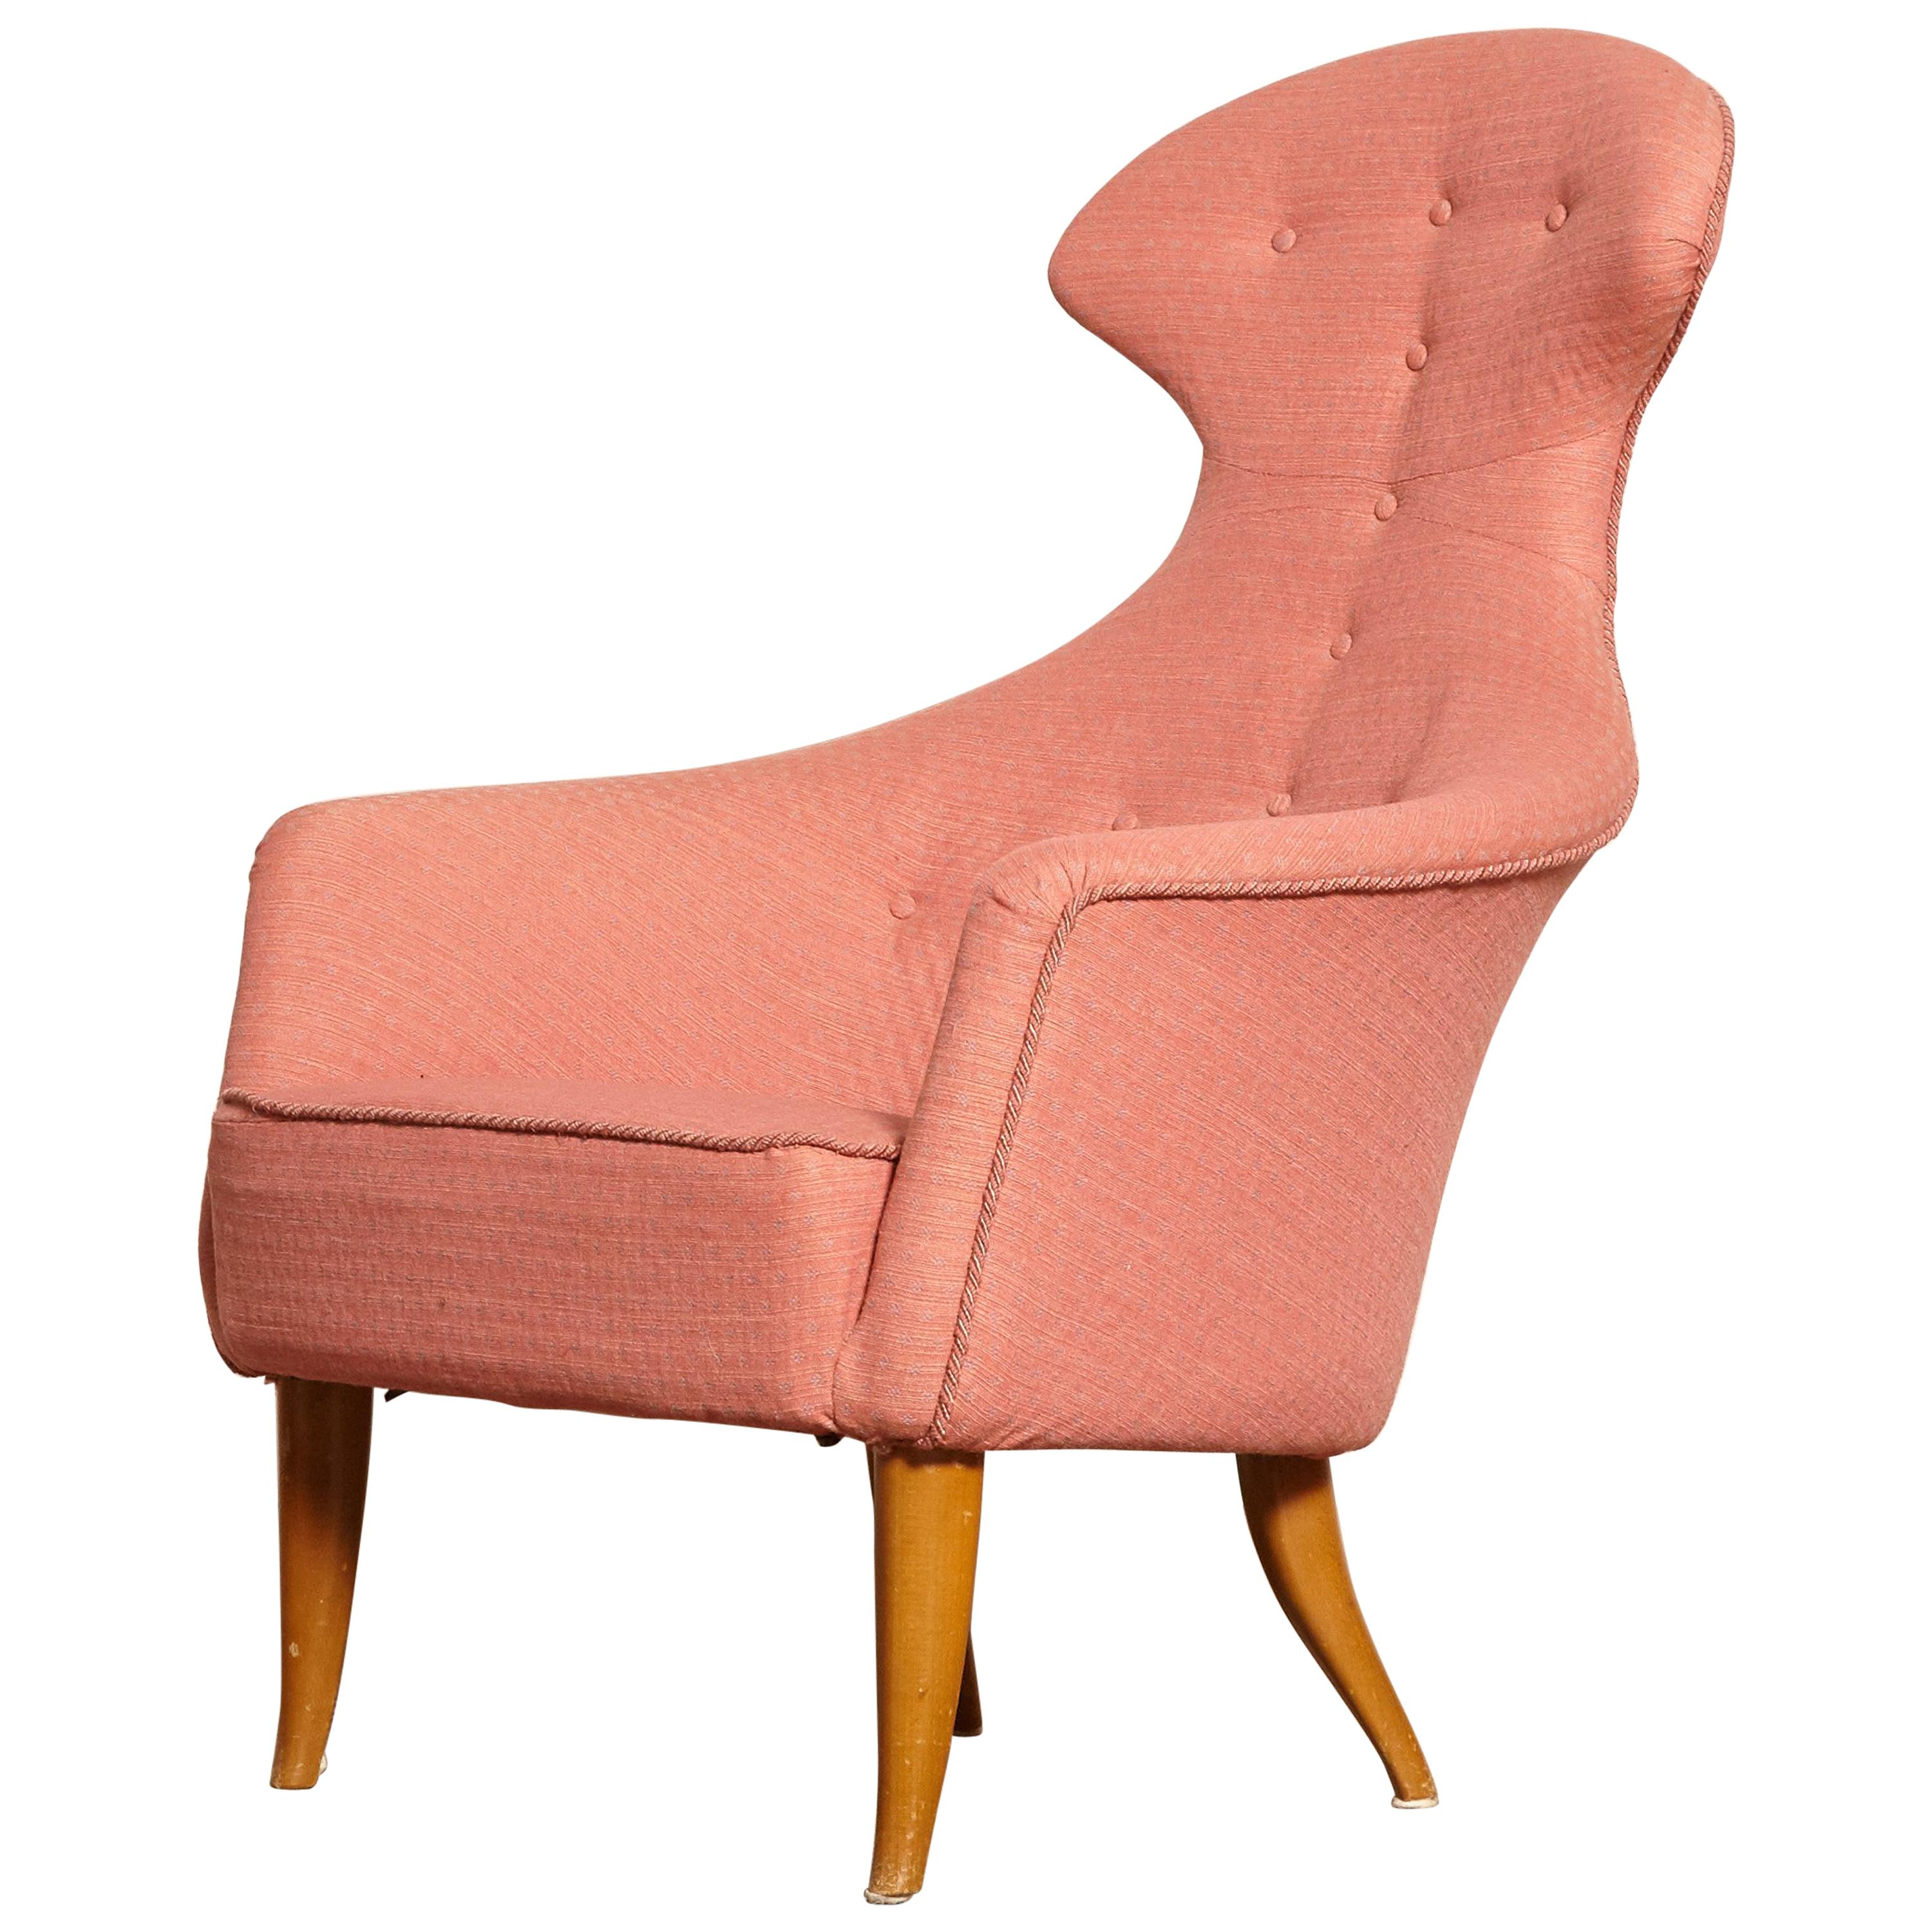 Kerstin Horlin Holmquist "Stora Eva" Chair, 1950s, Sweden - for reupholstery